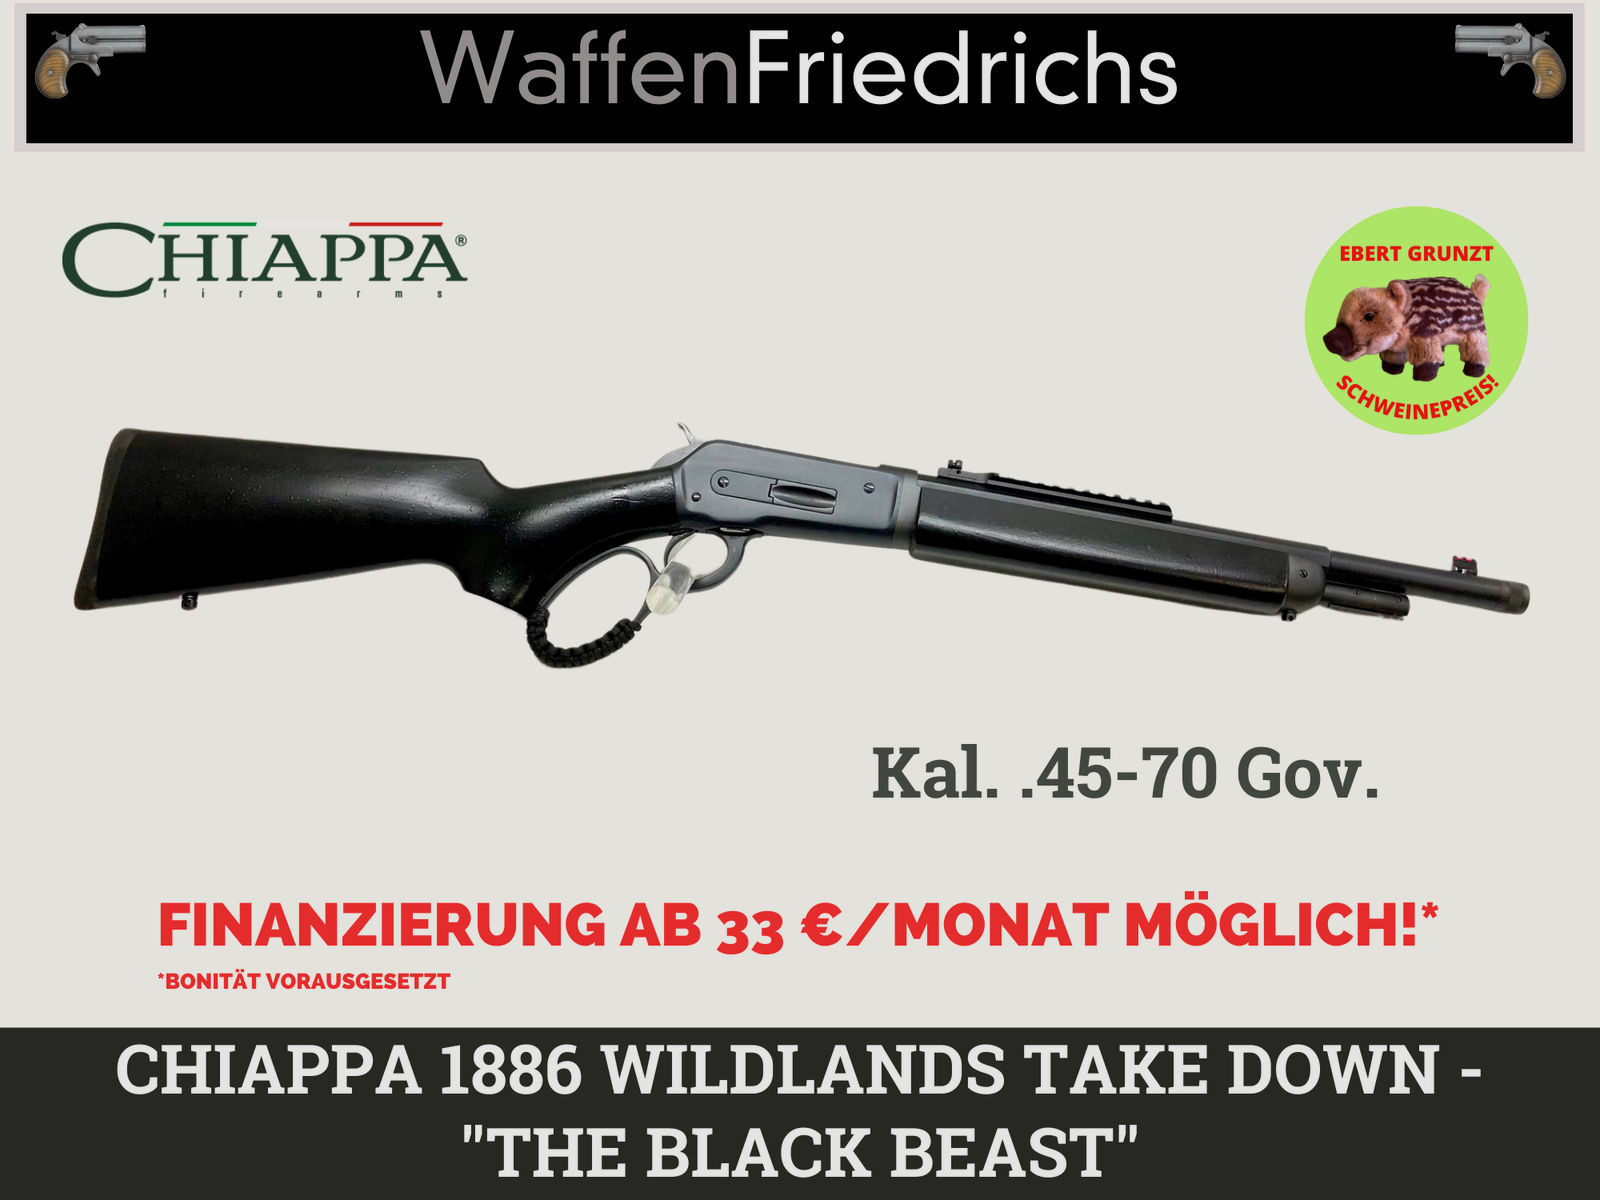 CHIAPPA FIREARMS UHR Mod. 1886 Wildlands TAKE DOWN | "THE BLACK BEAST" - Purzel-Preis-Wochen - WaffenFriedrichs